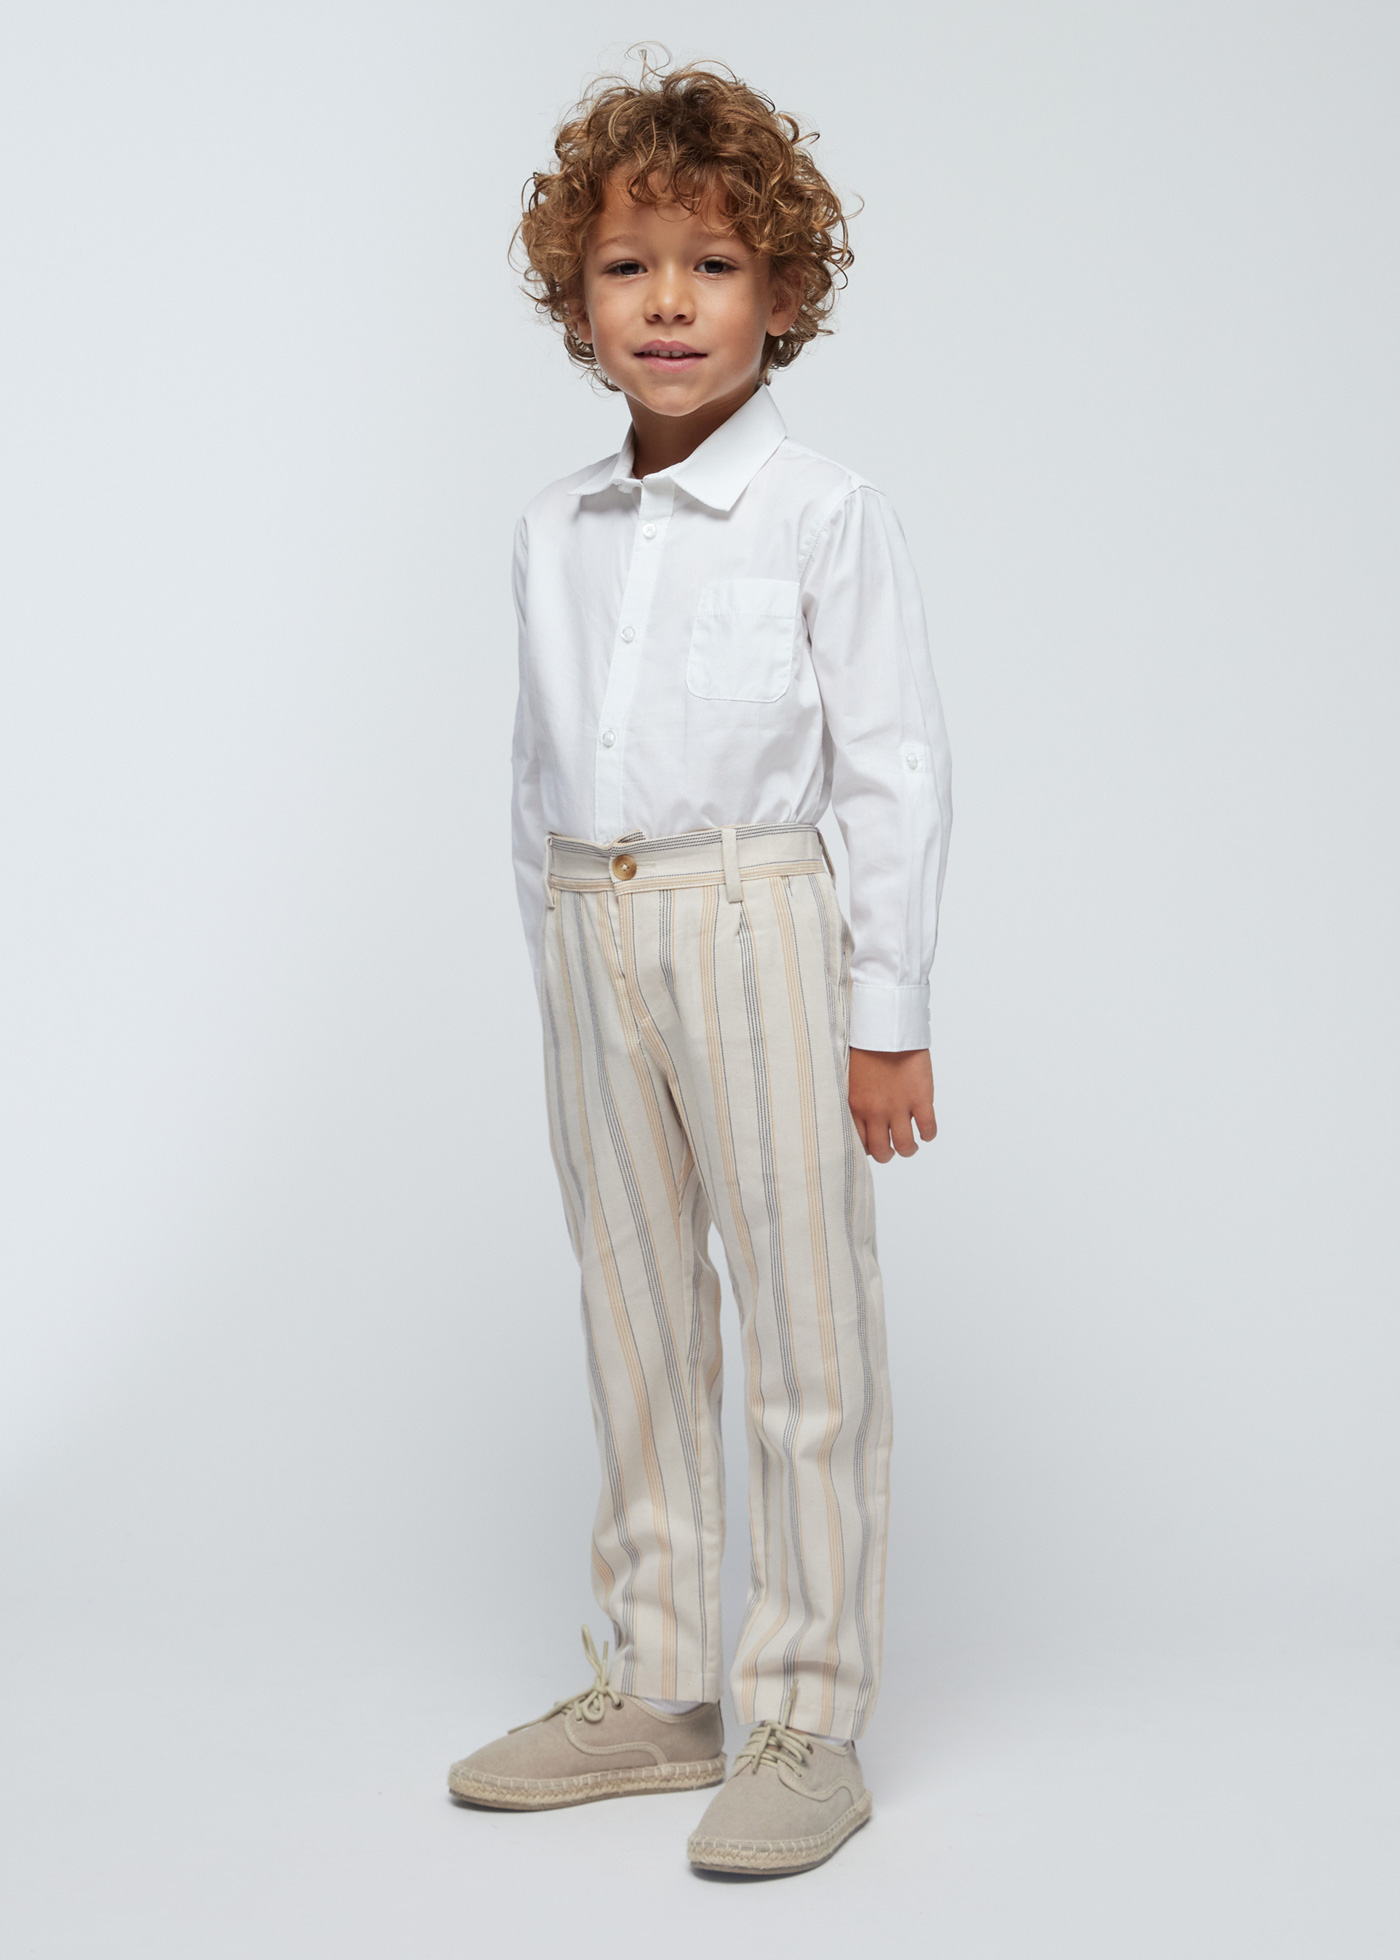 Our Comfy & Stylish Boys Linen Pants | Boys linen pants, Linen beach pants,  White linen pants